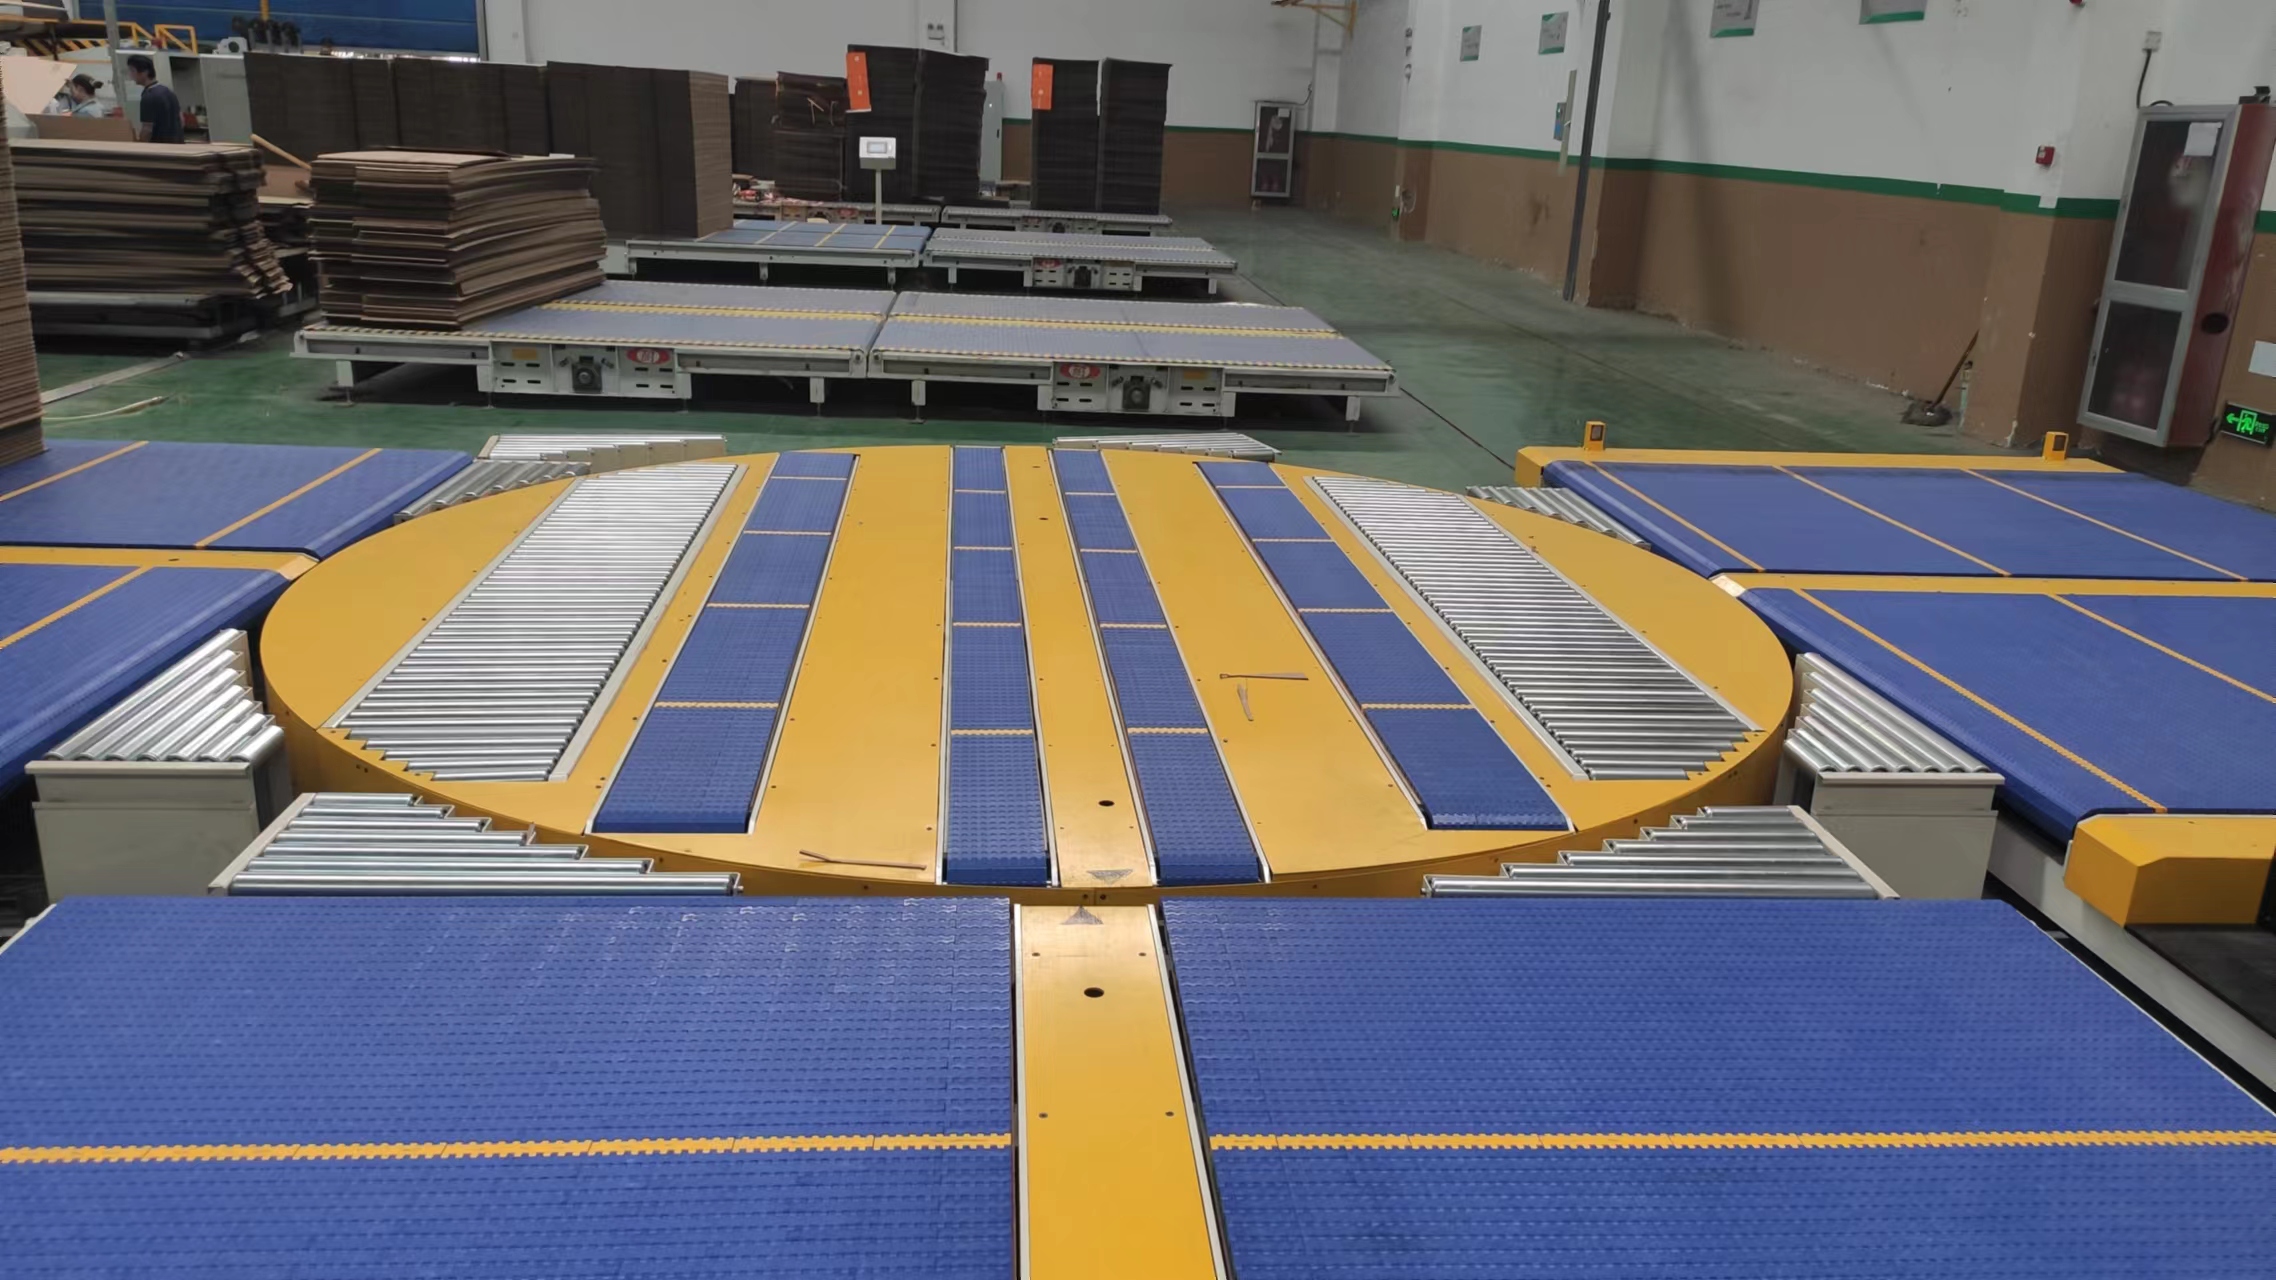 Auto Modular belt Conveyor system Plastics Conveyor system Cardboard Conveyor System